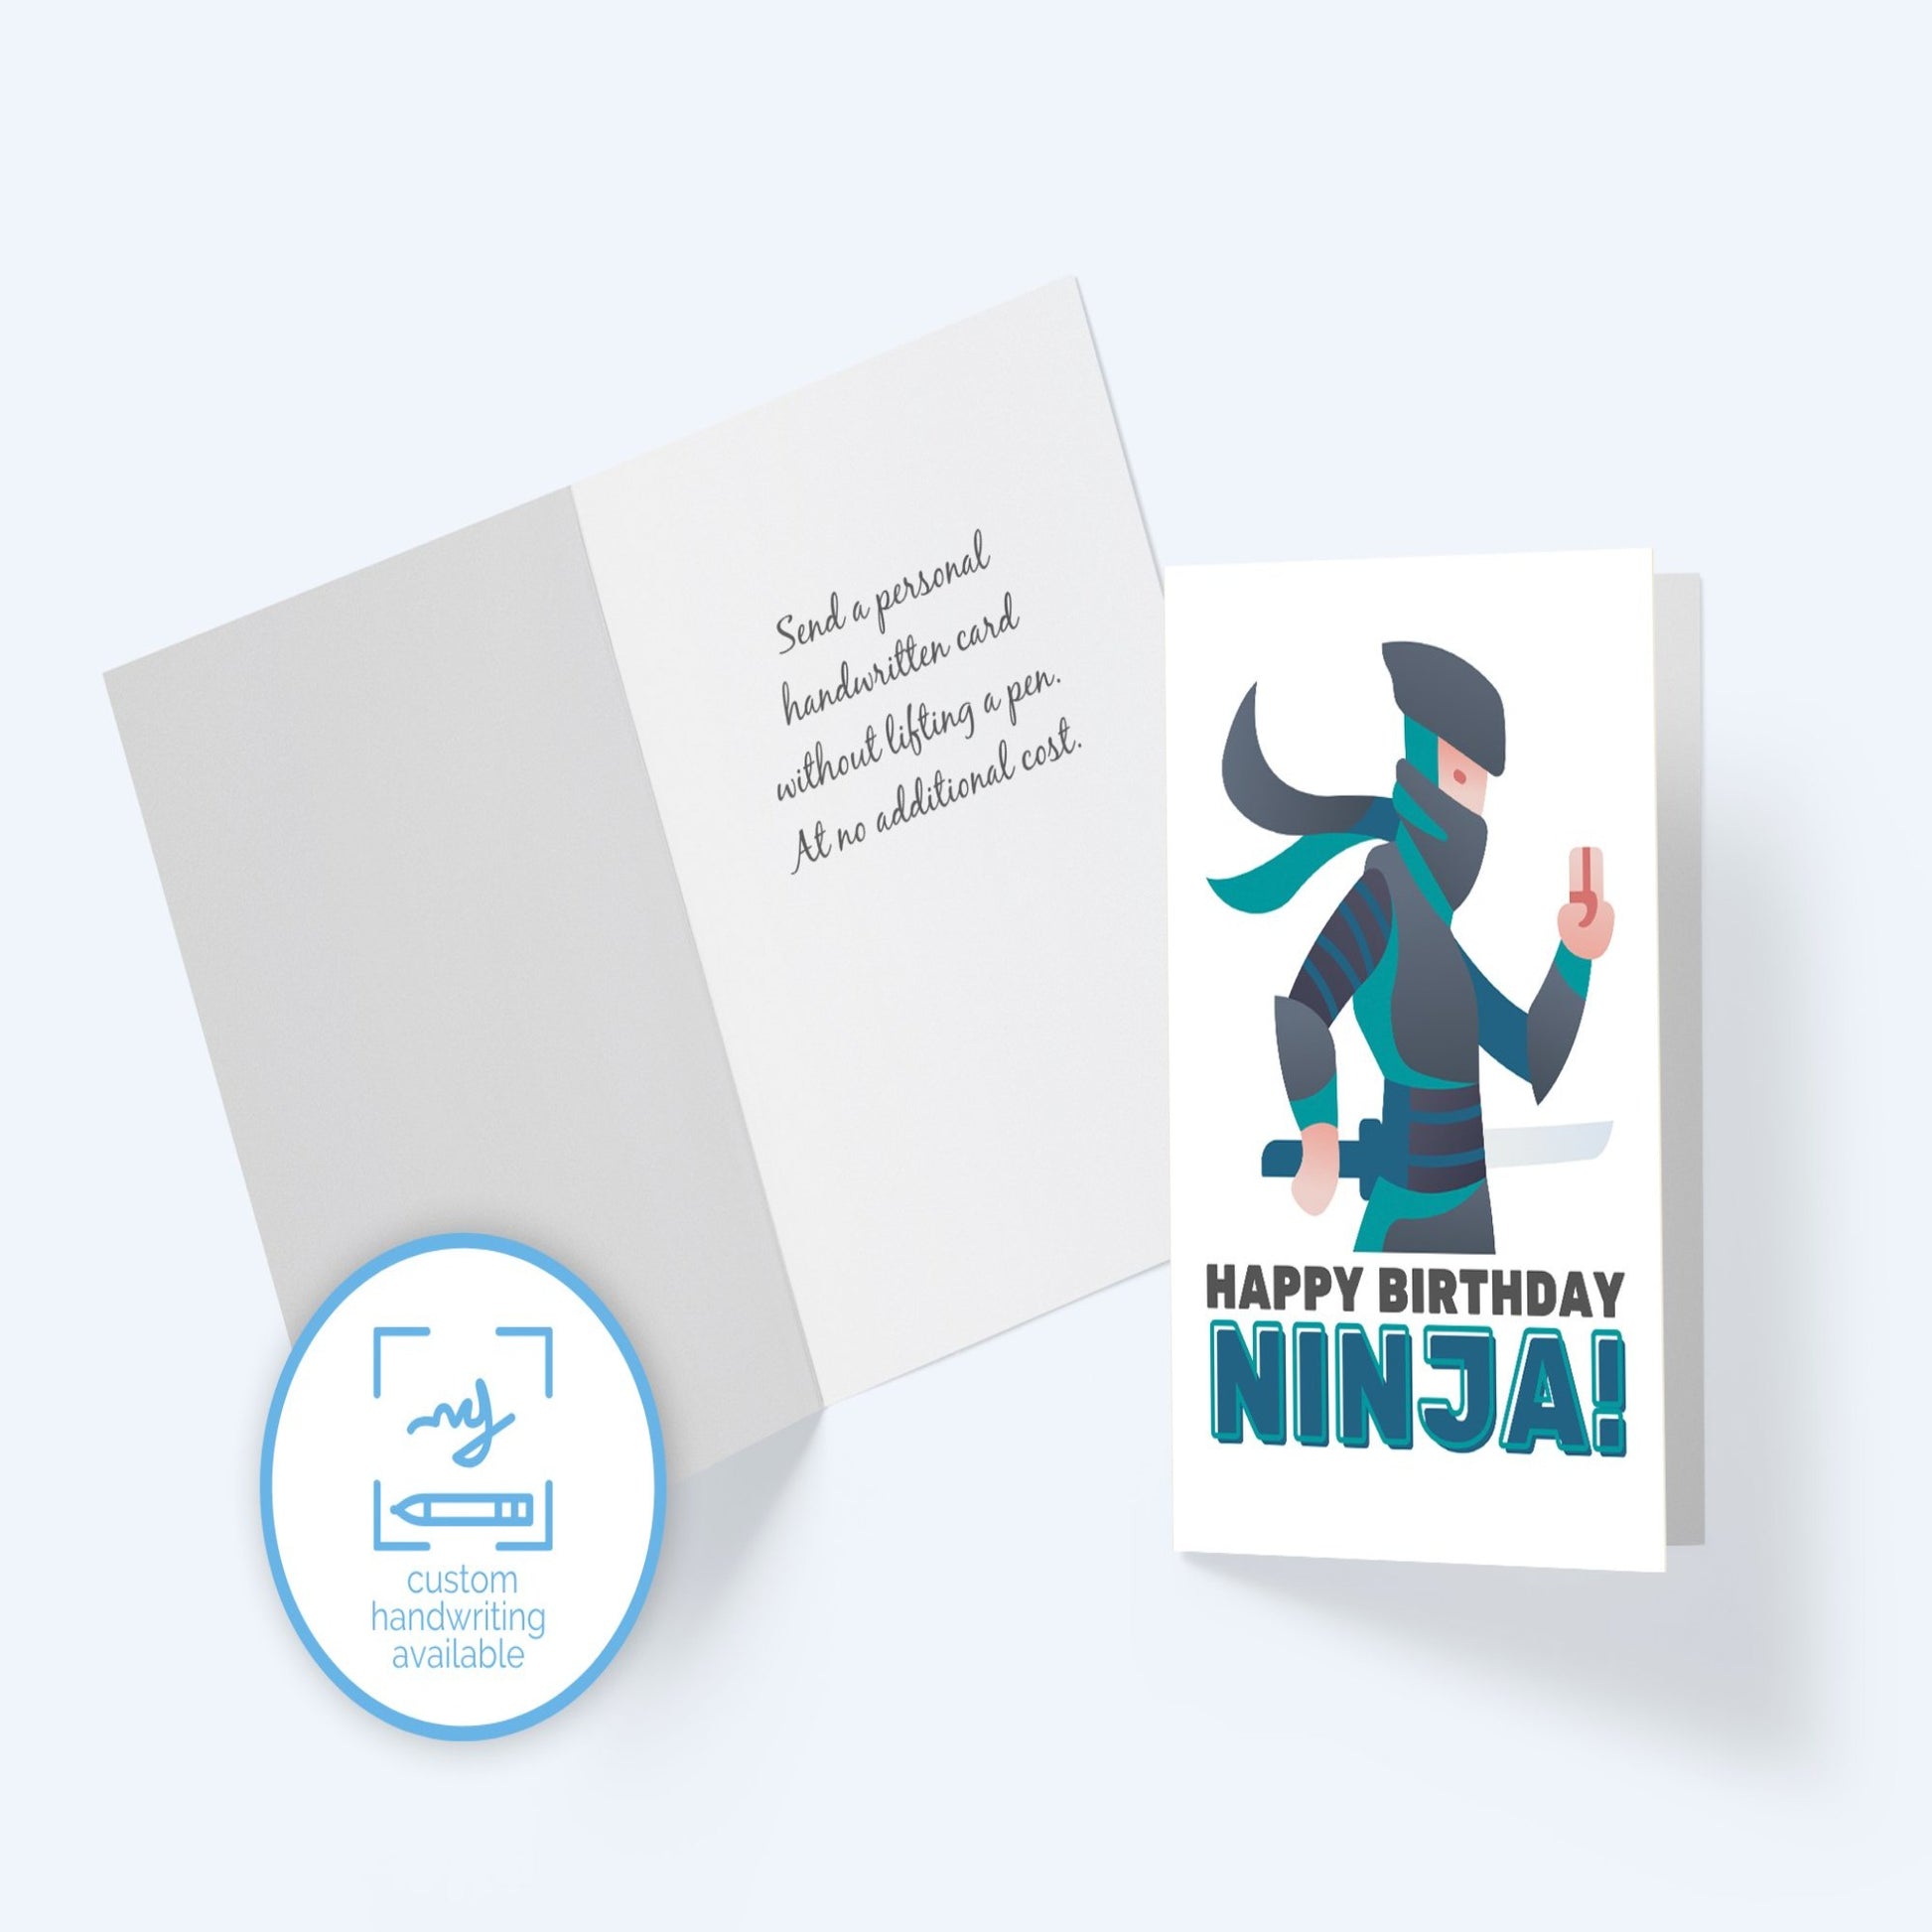 Happy Birthday Ninja Greeting Card.